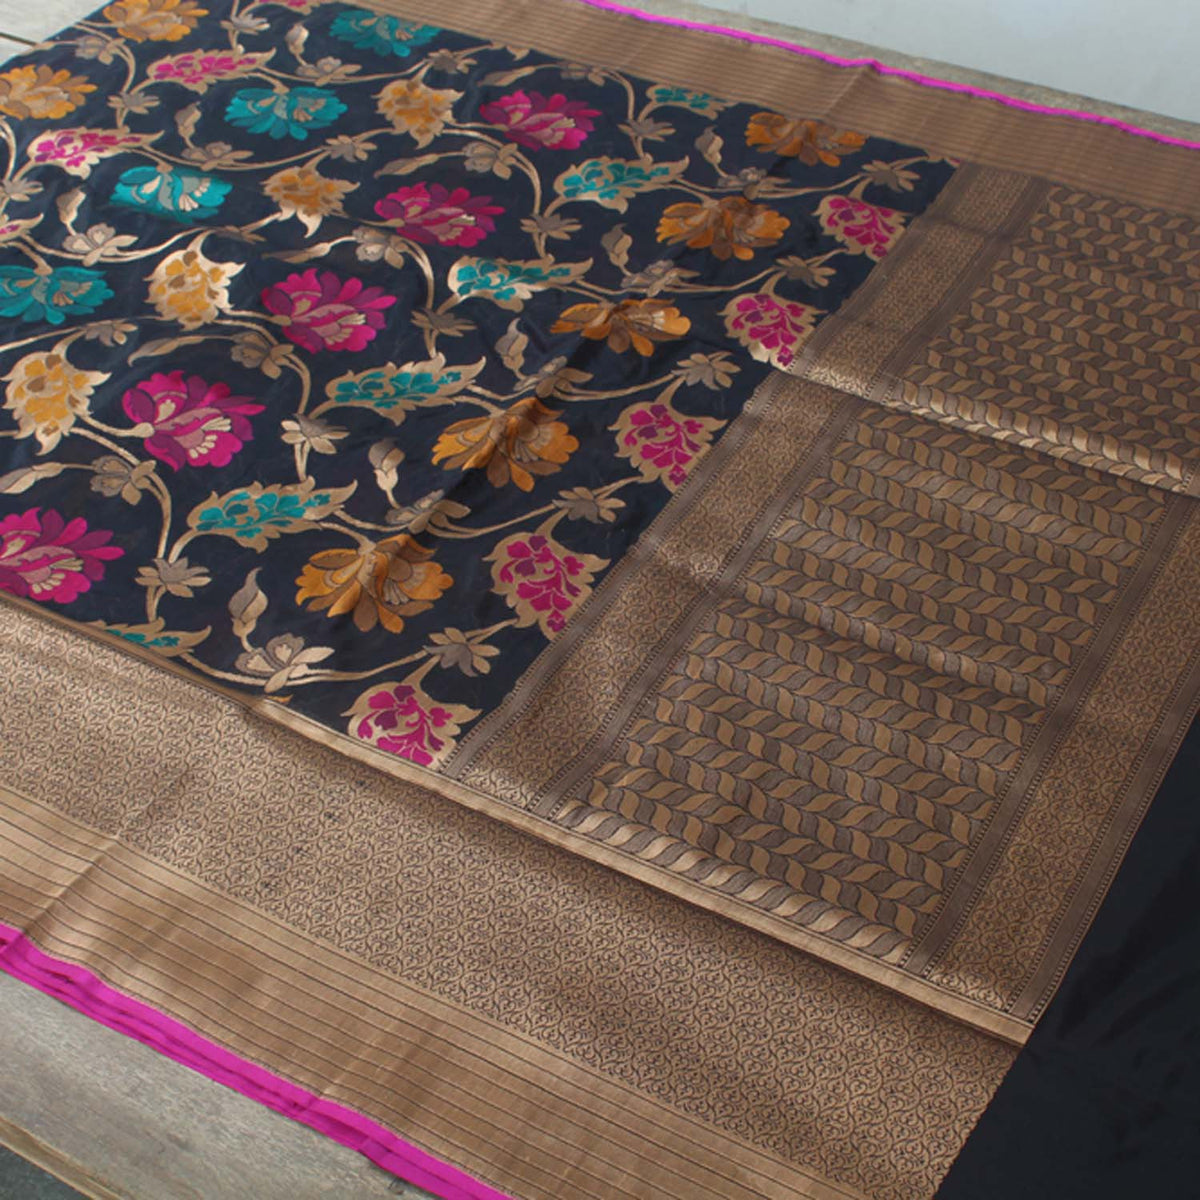 Black Pure Silk Georgette Banarasi Handloom Saree - Tilfi